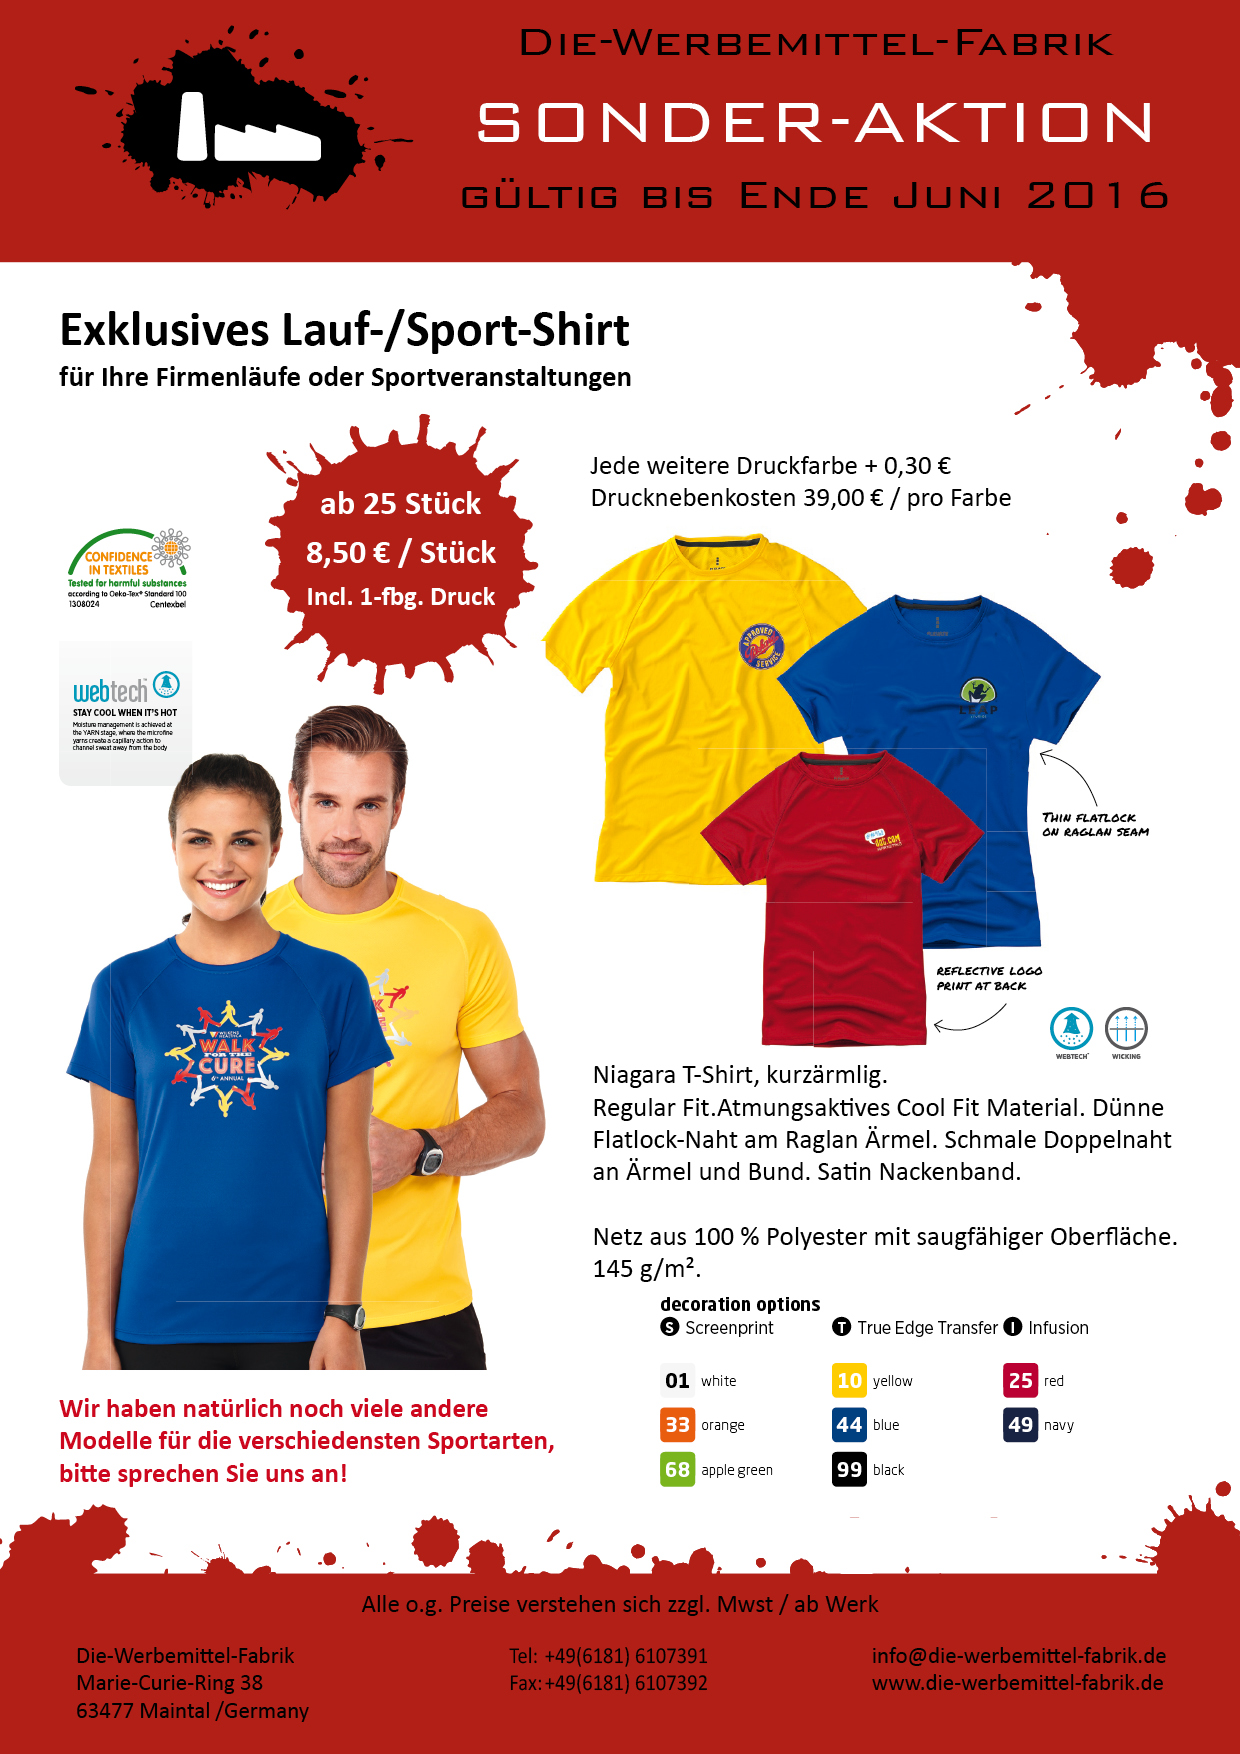 Exclusive Lauf-Shirts + Sport-Shirts